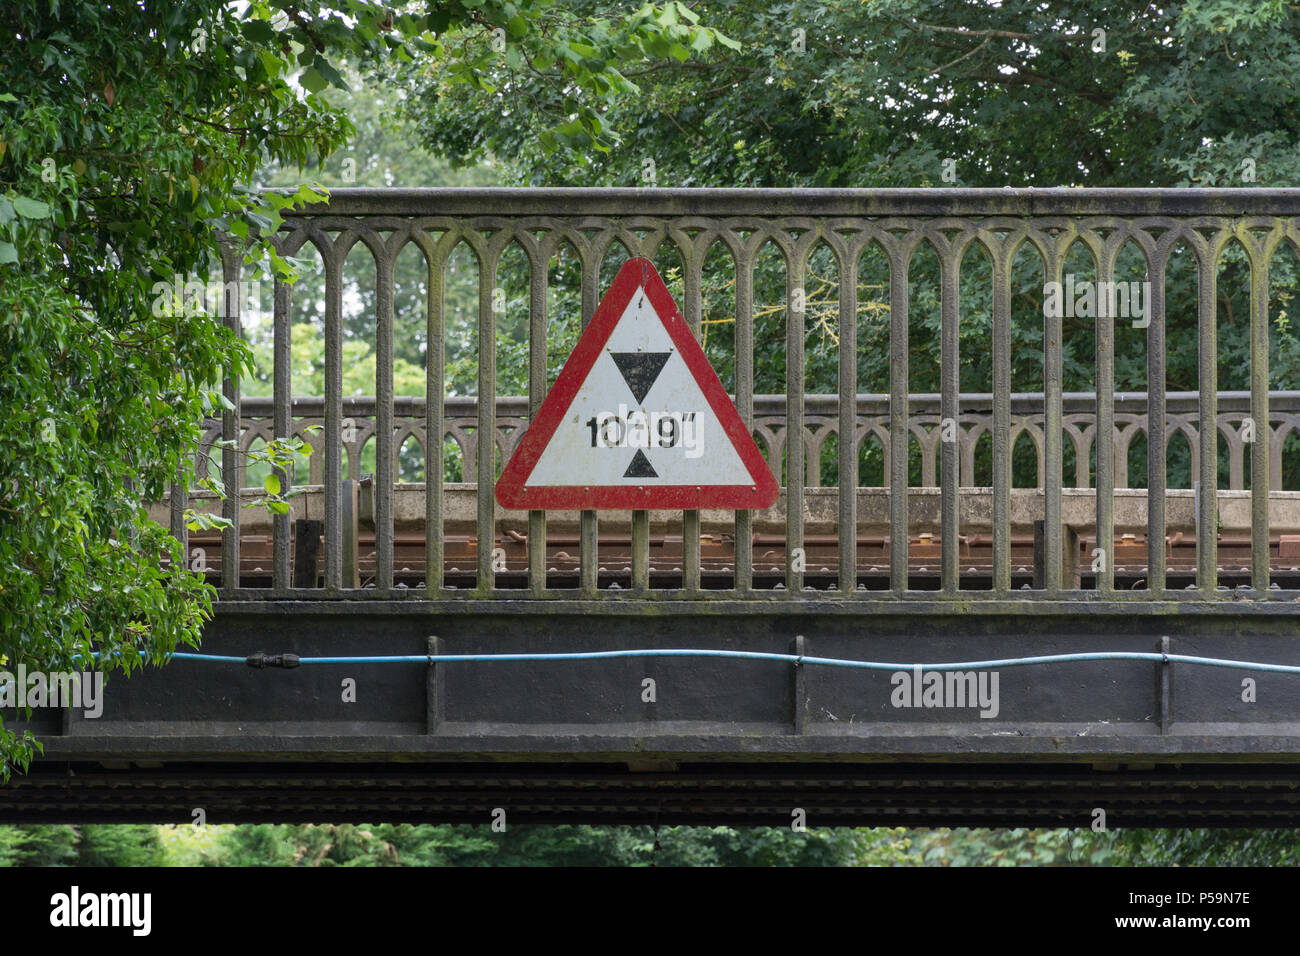 Pont faible sign in Surrey, UK Banque D'Images